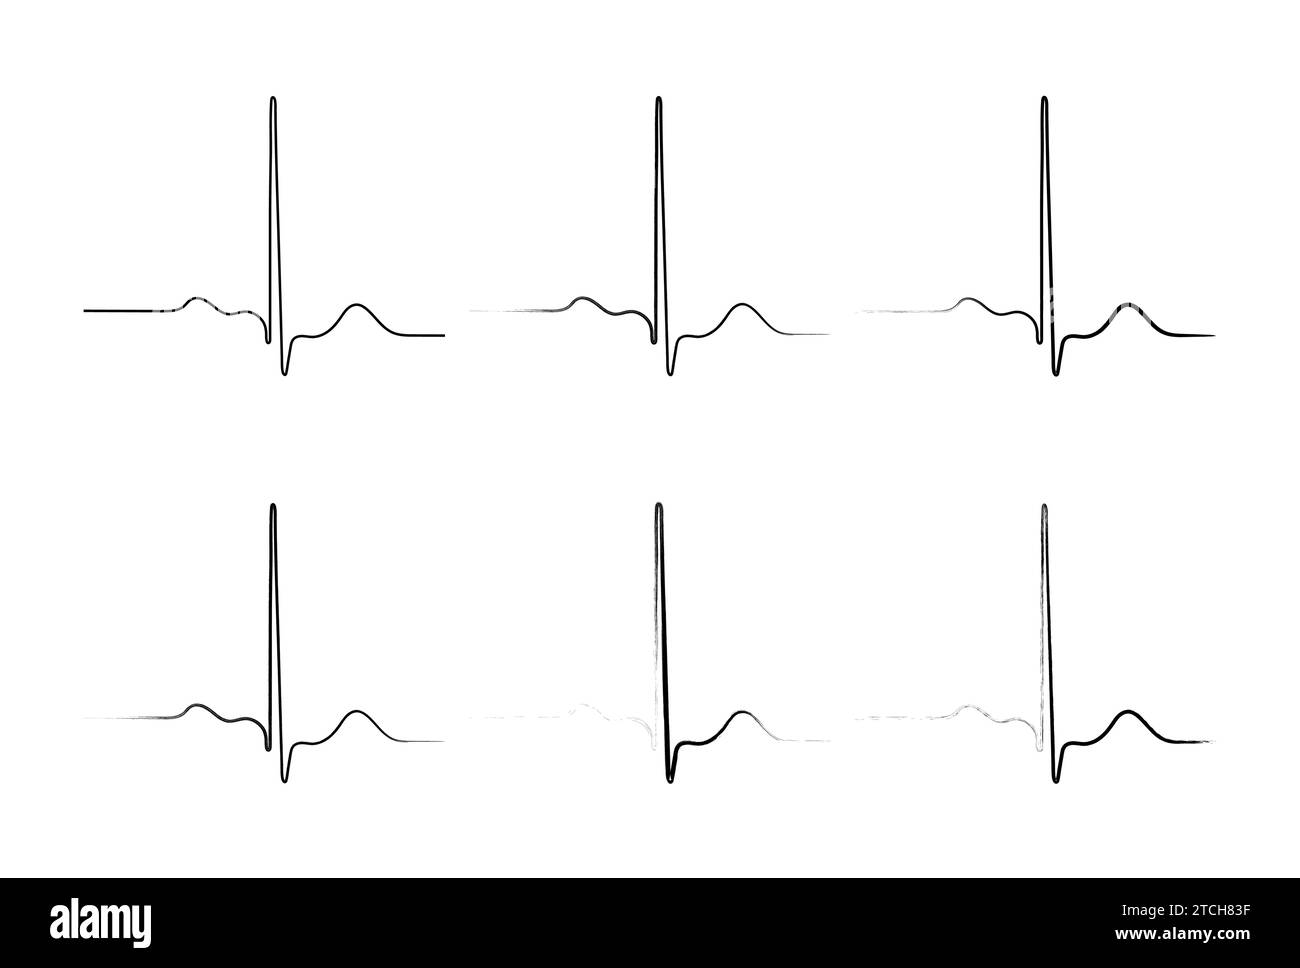 Repolarisation ventriculaire, cycle cardiaque, ECG du coeur en rythme sinusal normal, intervalle QT de l'ECG. Illustration de Vecteur